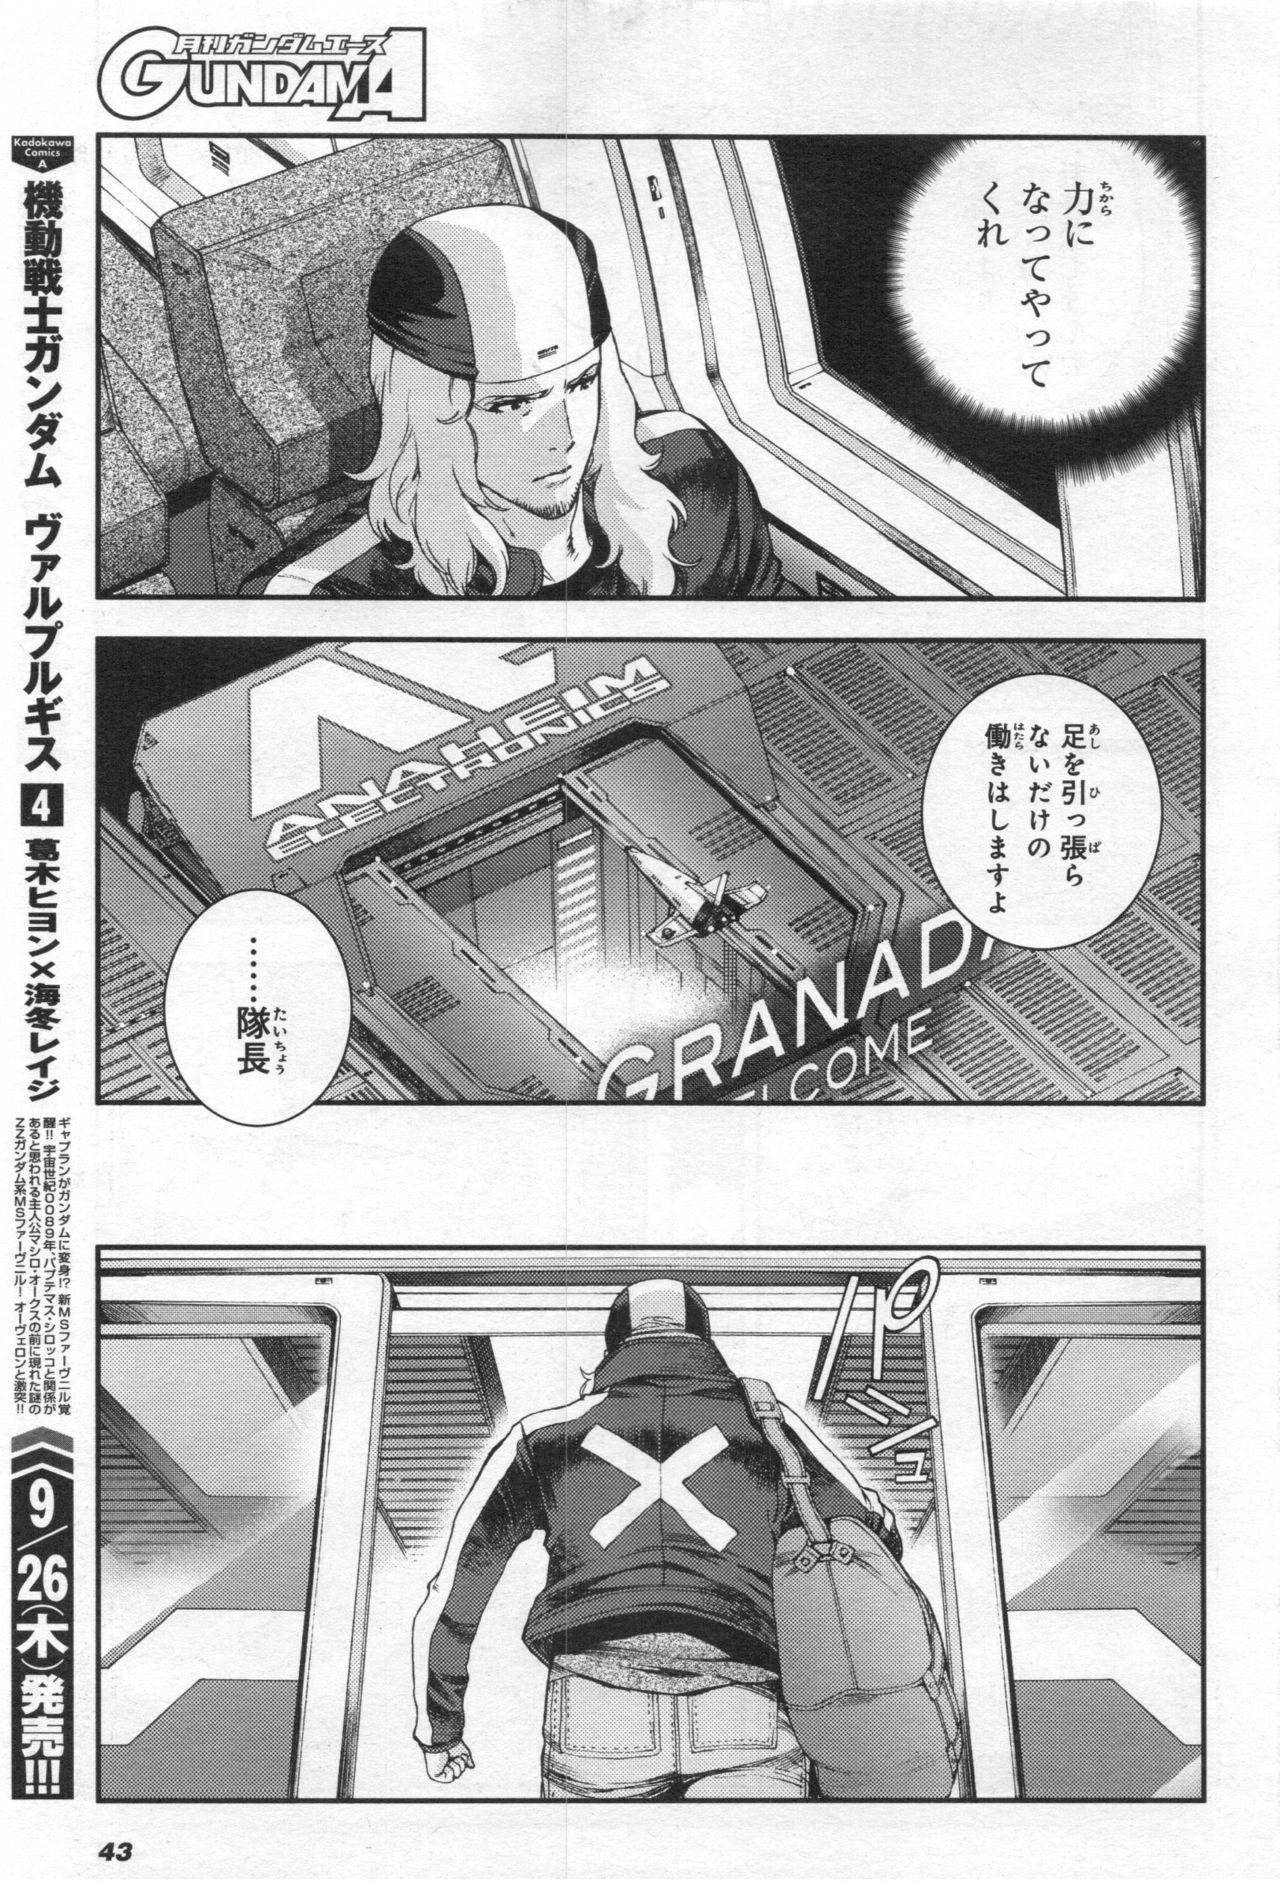 Gundam Ace - October 2019 45